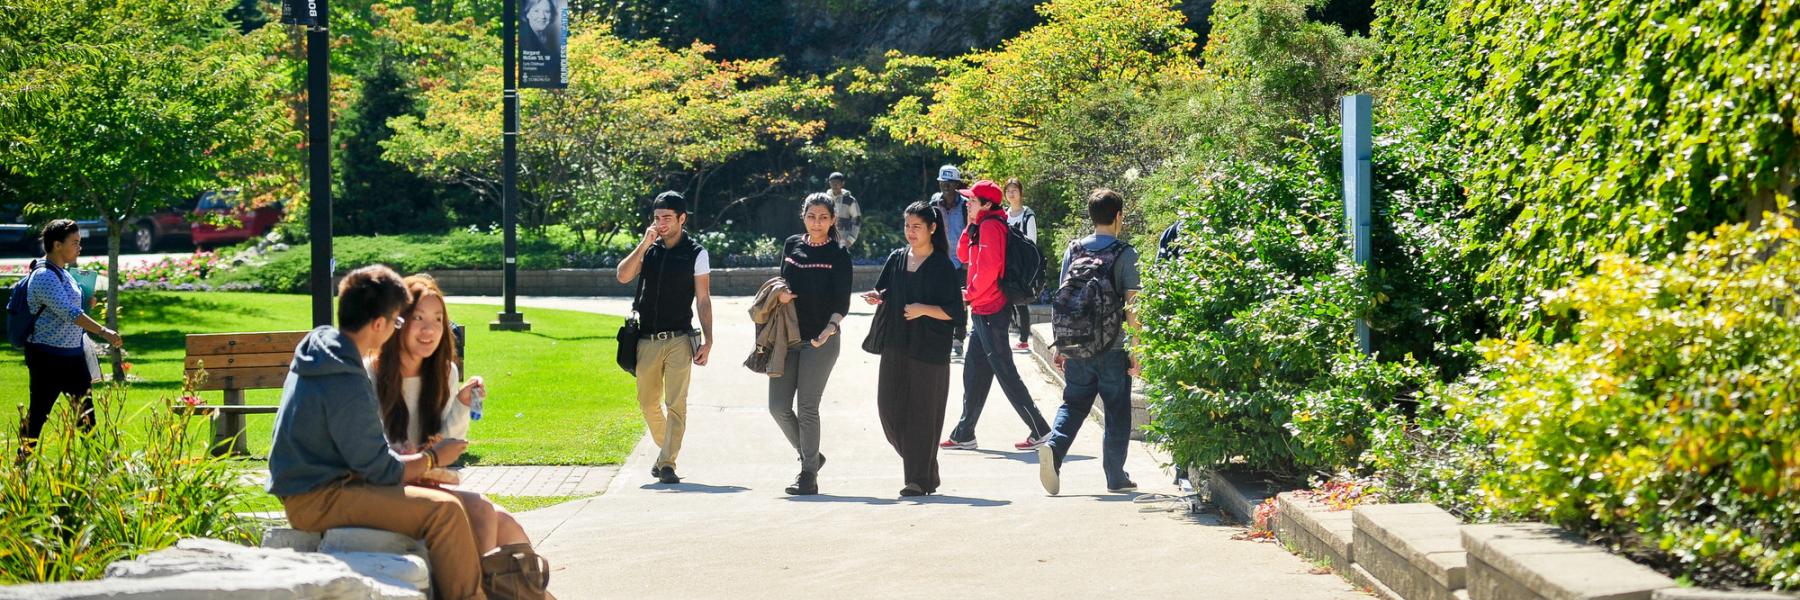 UTSC Campus students walking